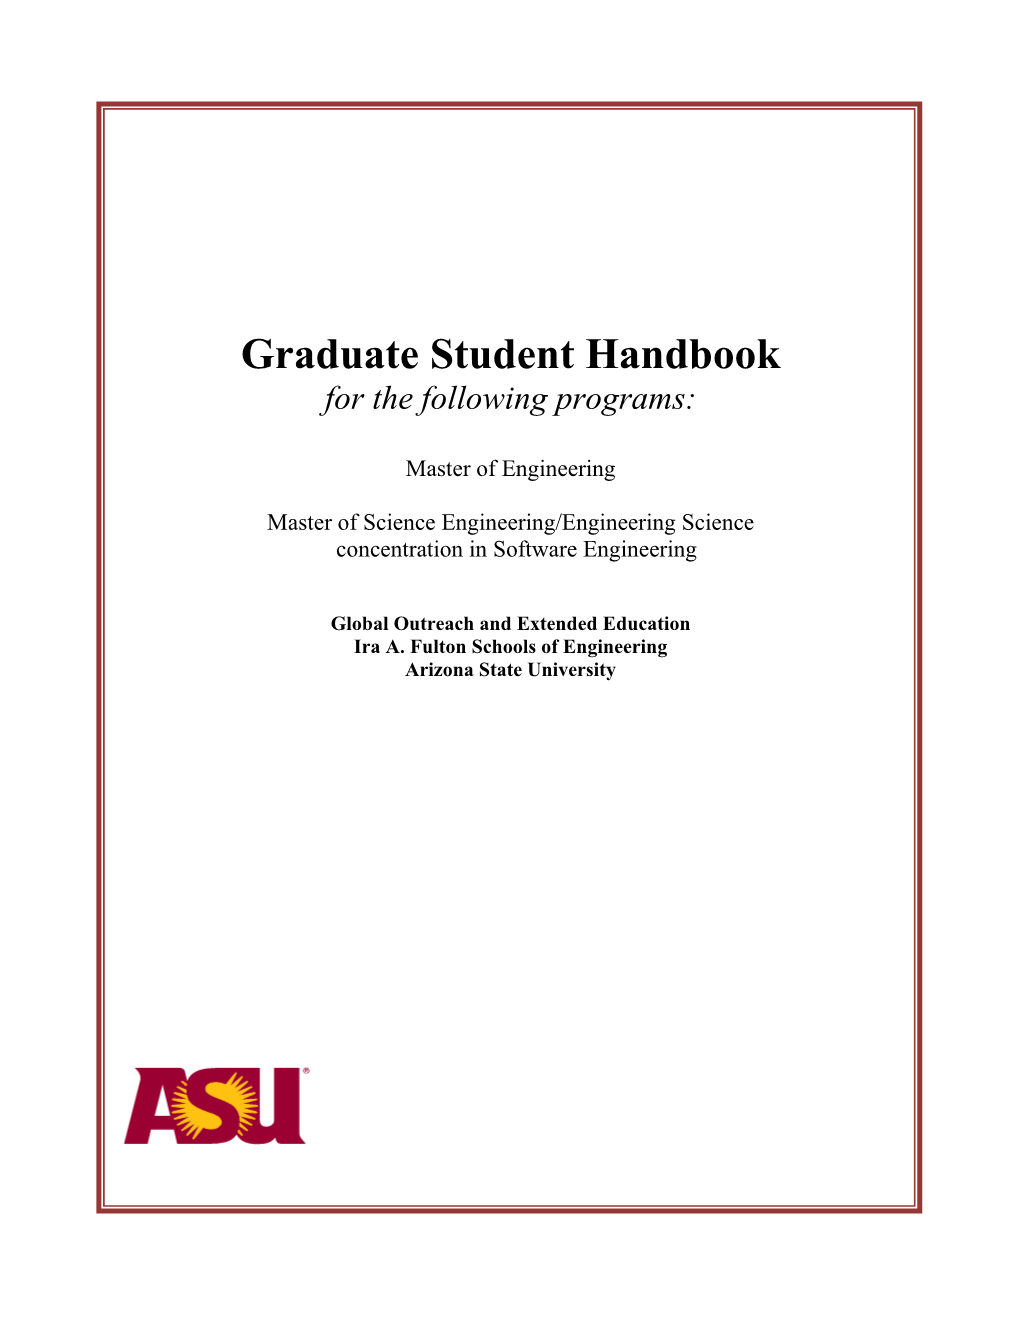 GOEE Graduate Student Handbook